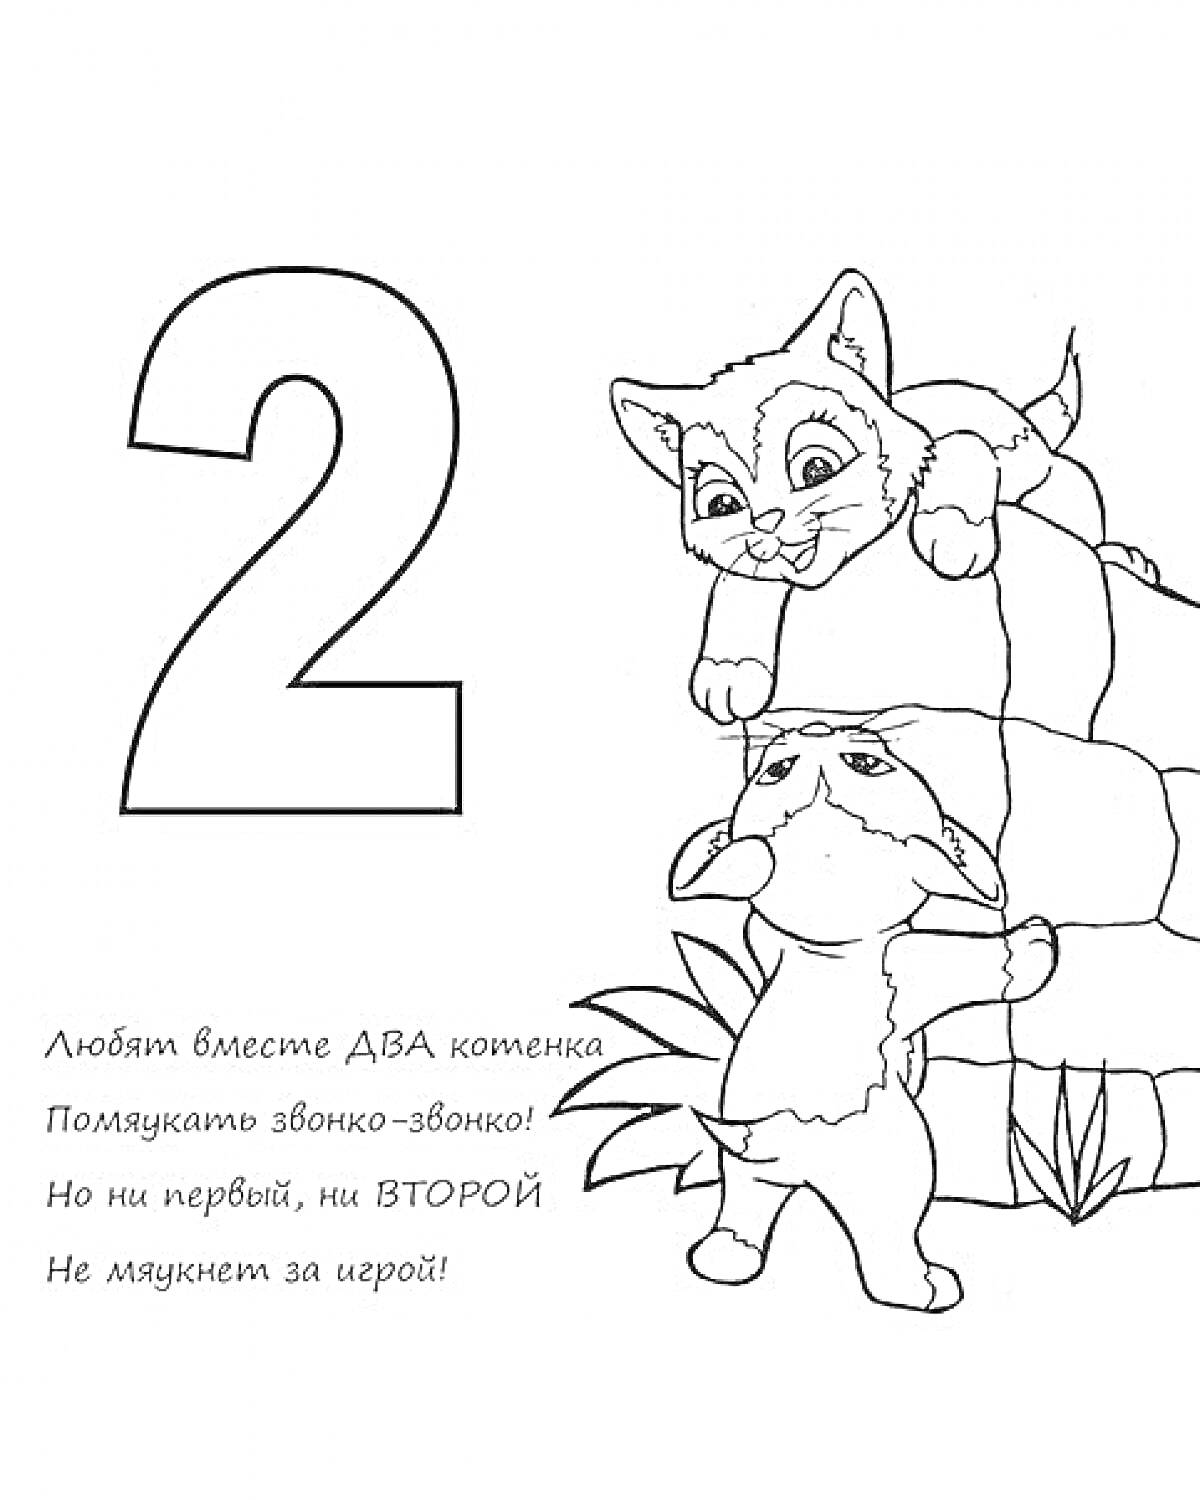 Раскраска Раскраска с цифрой 2, двумя котятами, стеной и стихотворением